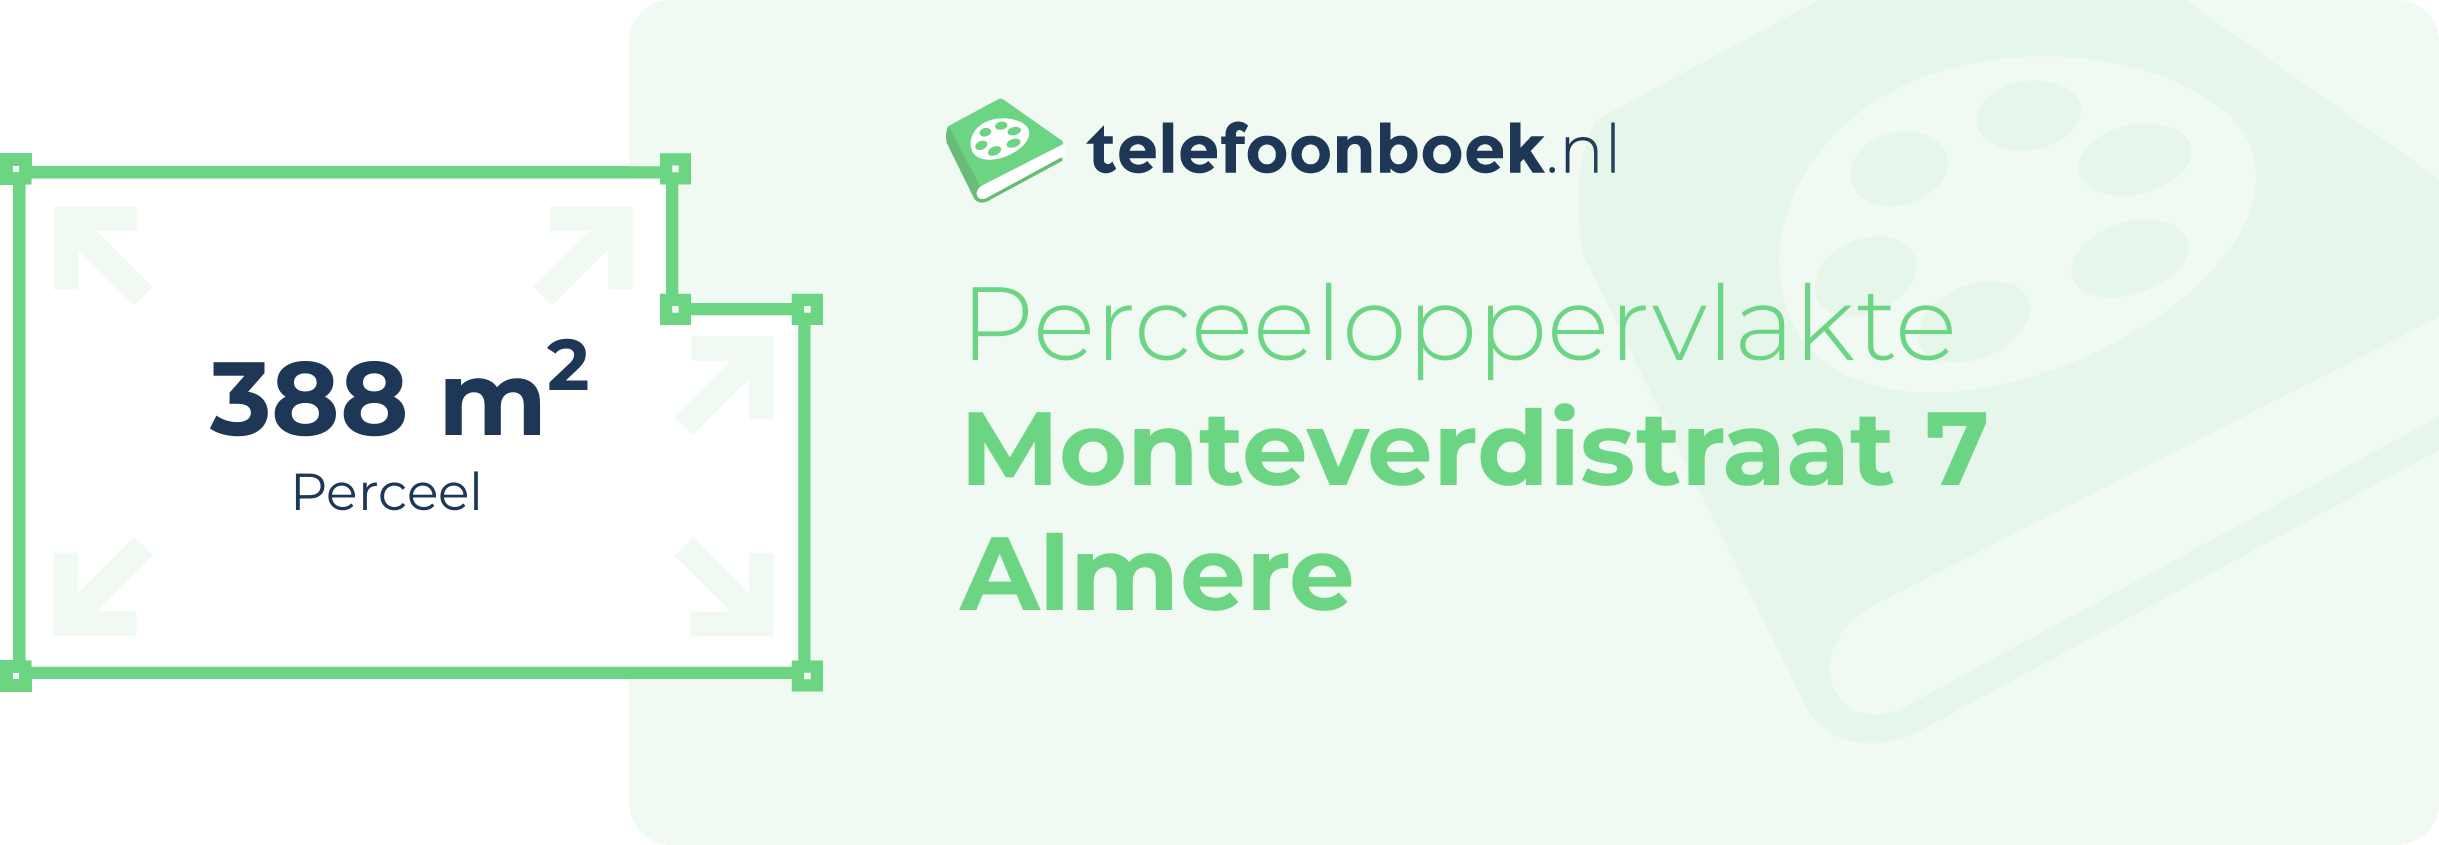 Perceeloppervlakte Monteverdistraat 7 Almere